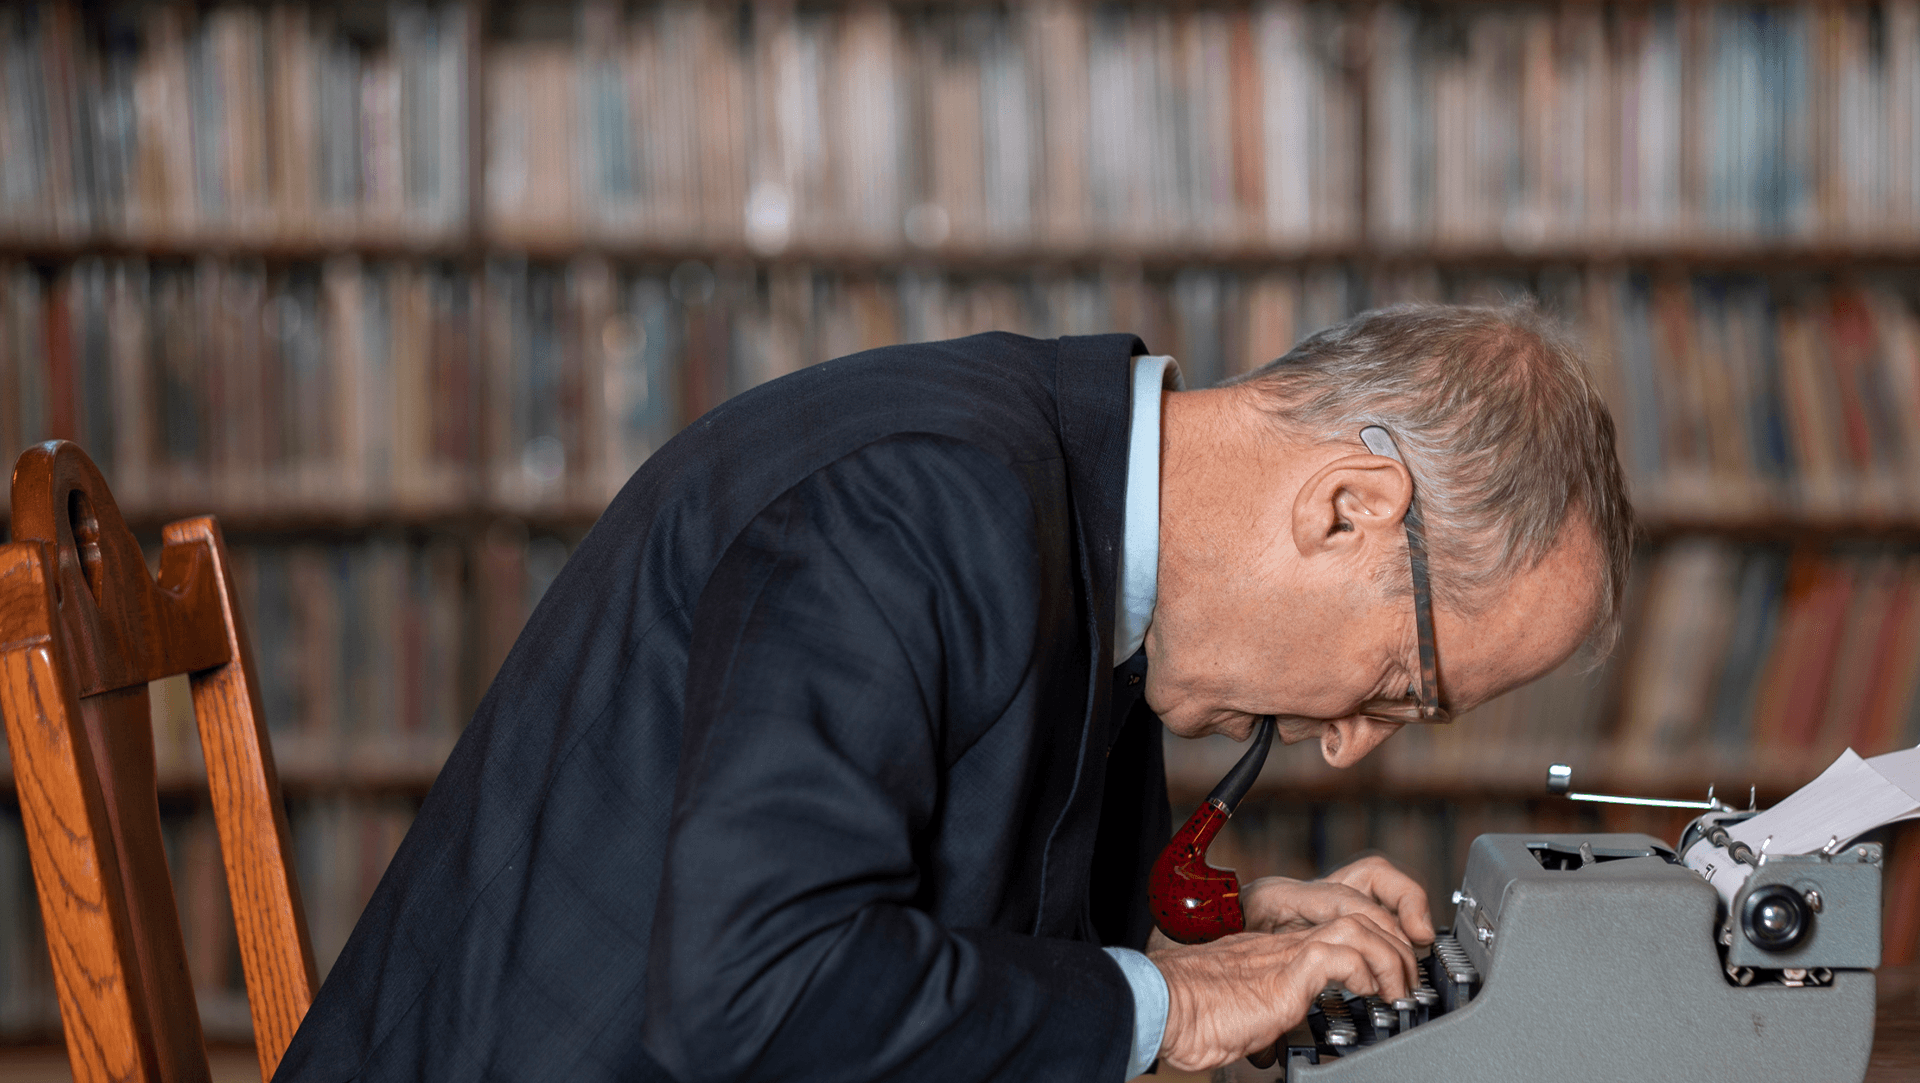 Author David Sedaris hunched over a typewriter